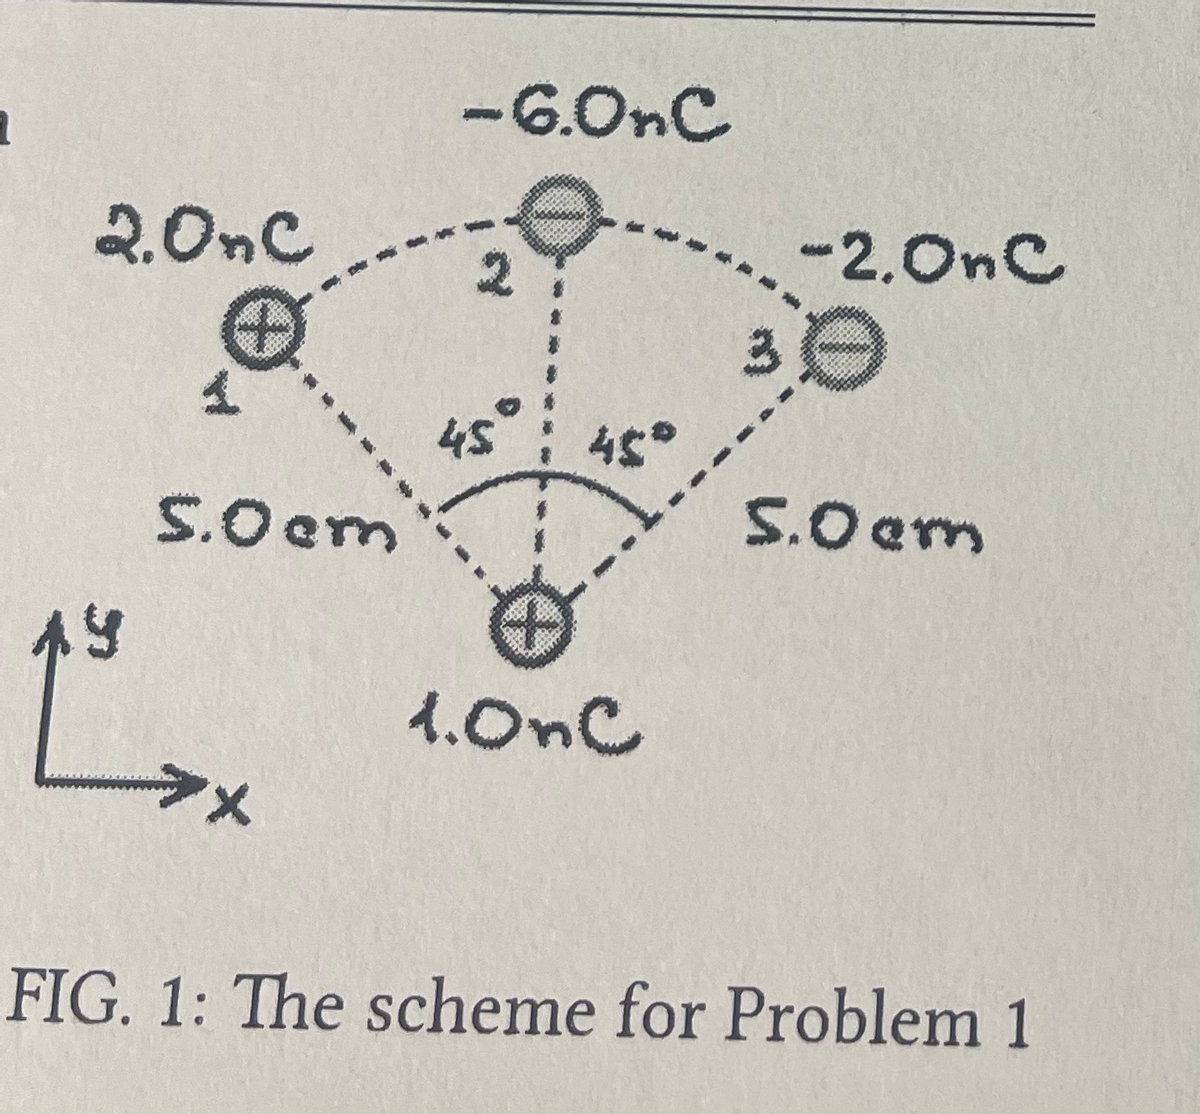 2.0nc
AY
4
5.0cm
**
-6.OnC
45°
1.0nC
-2.0nC
30
5.0 cm
FIG. 1: The scheme for Problem 1